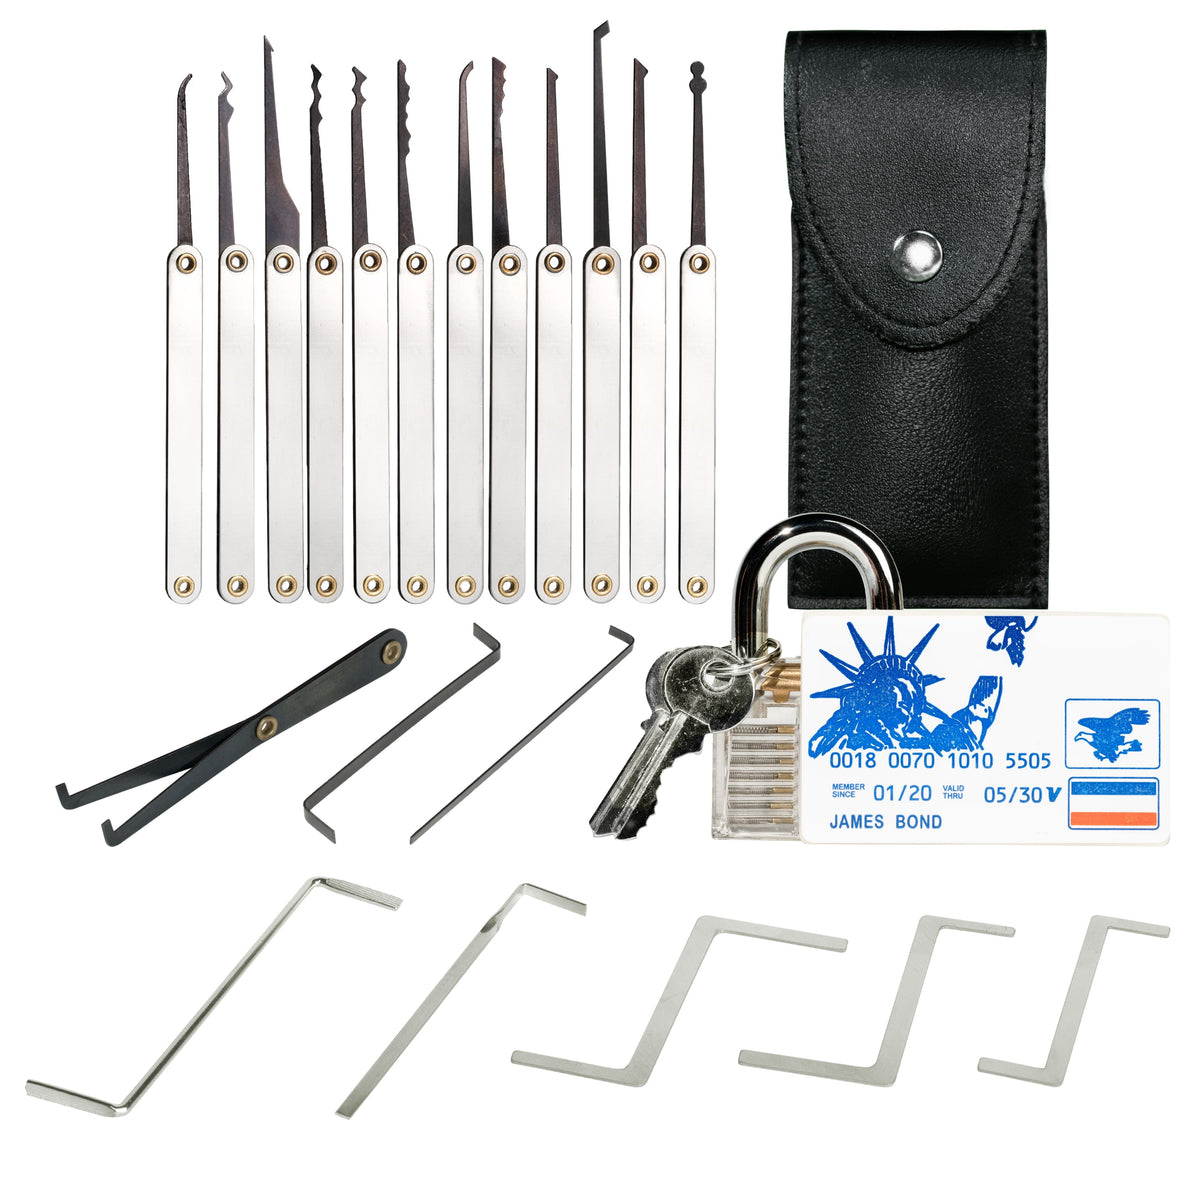 (V1)22 Pcs Lock Picking Kit with Transparent Practice Lock Tool - Professional Stainless Steel Multitool Practice Tool Lock Set Handbag for Beginners & Locksmiths